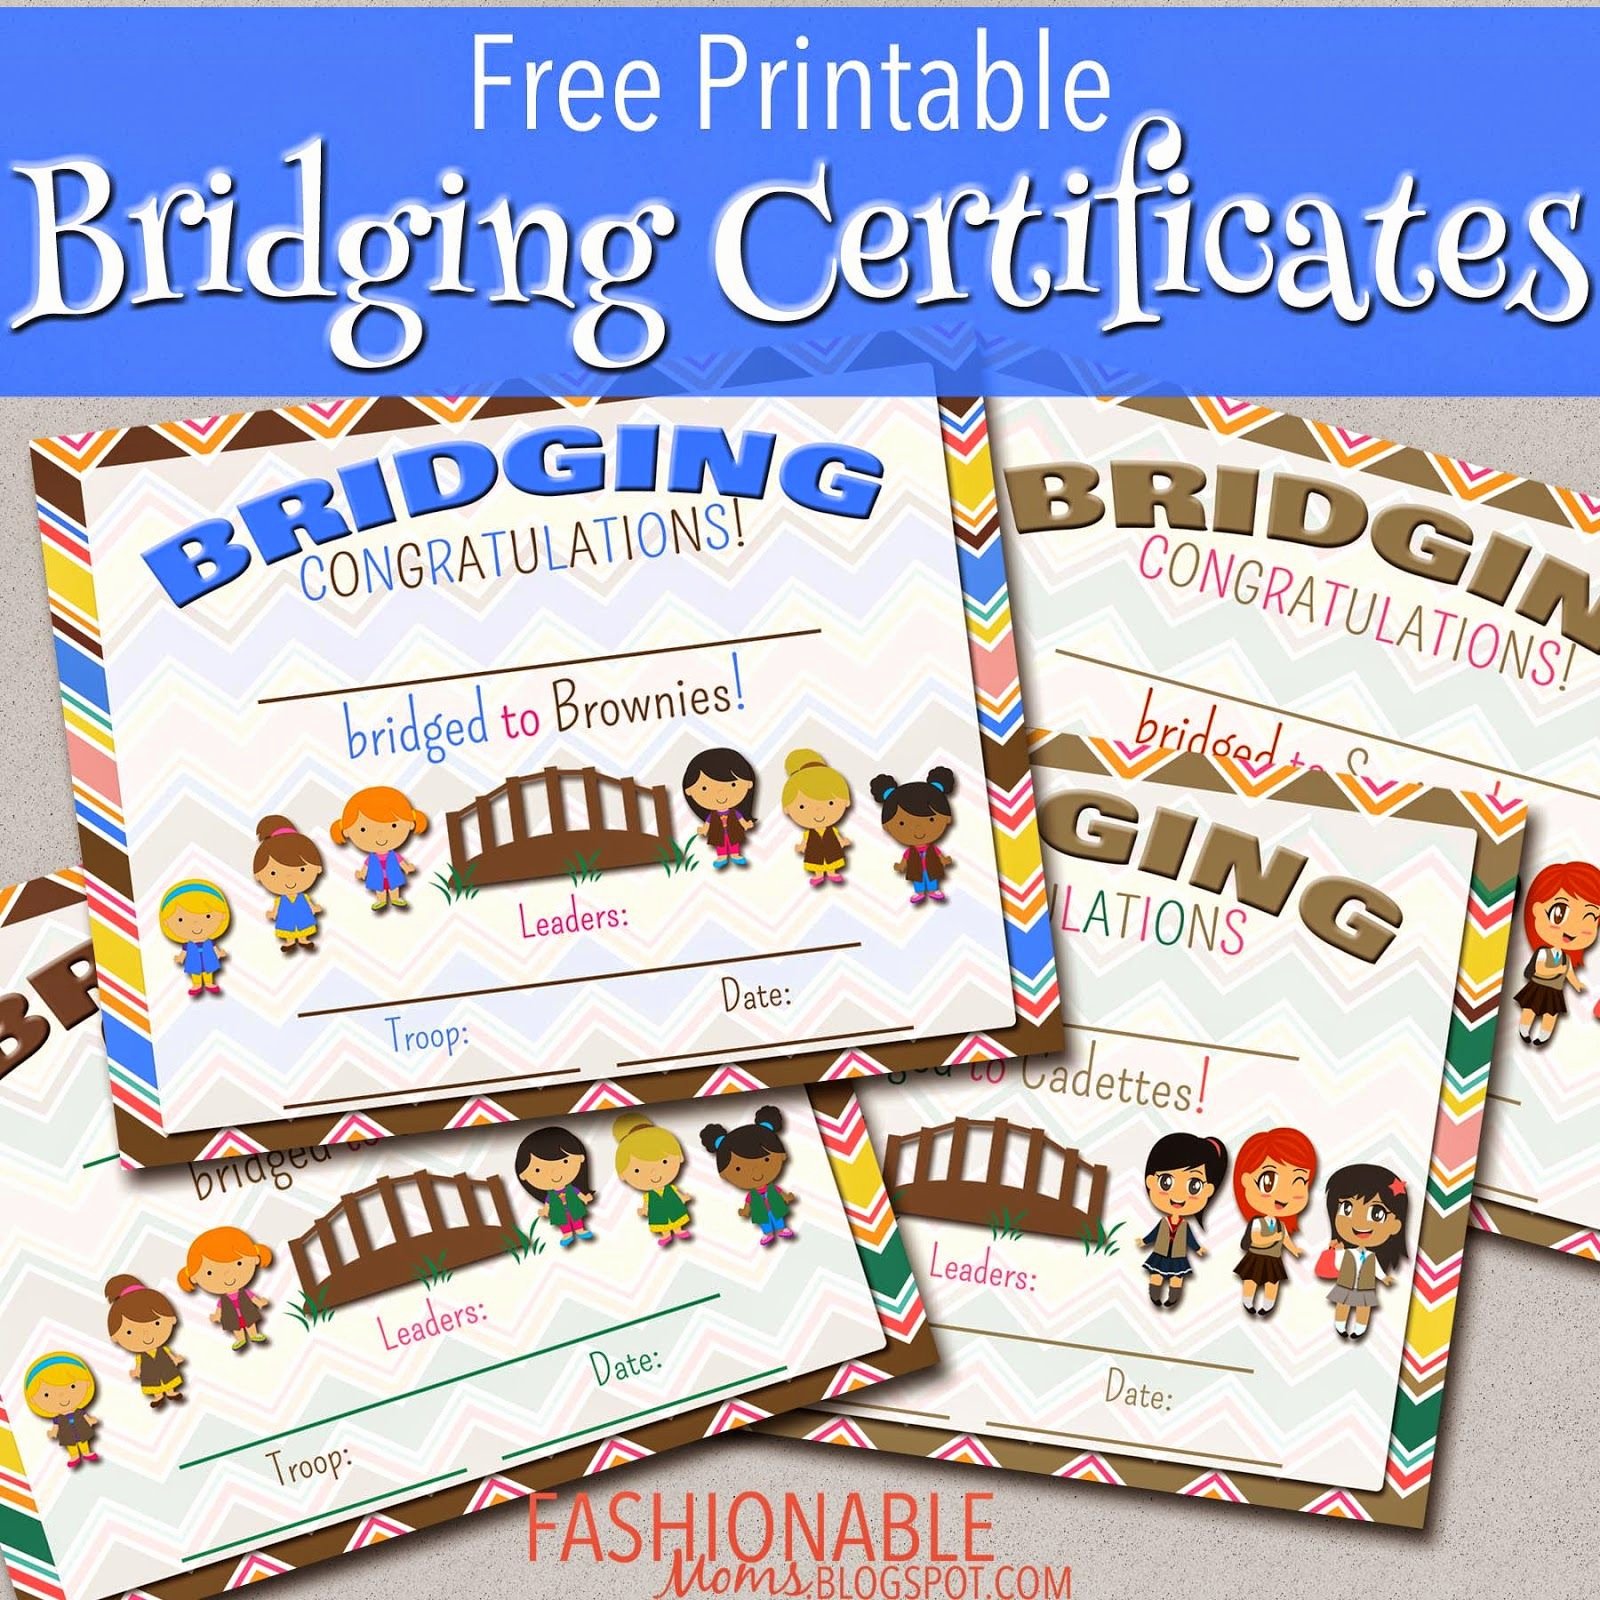 Girl Scout Bridging Certificates Beautiful Free Printable Bridging Certificates Girl Scouts